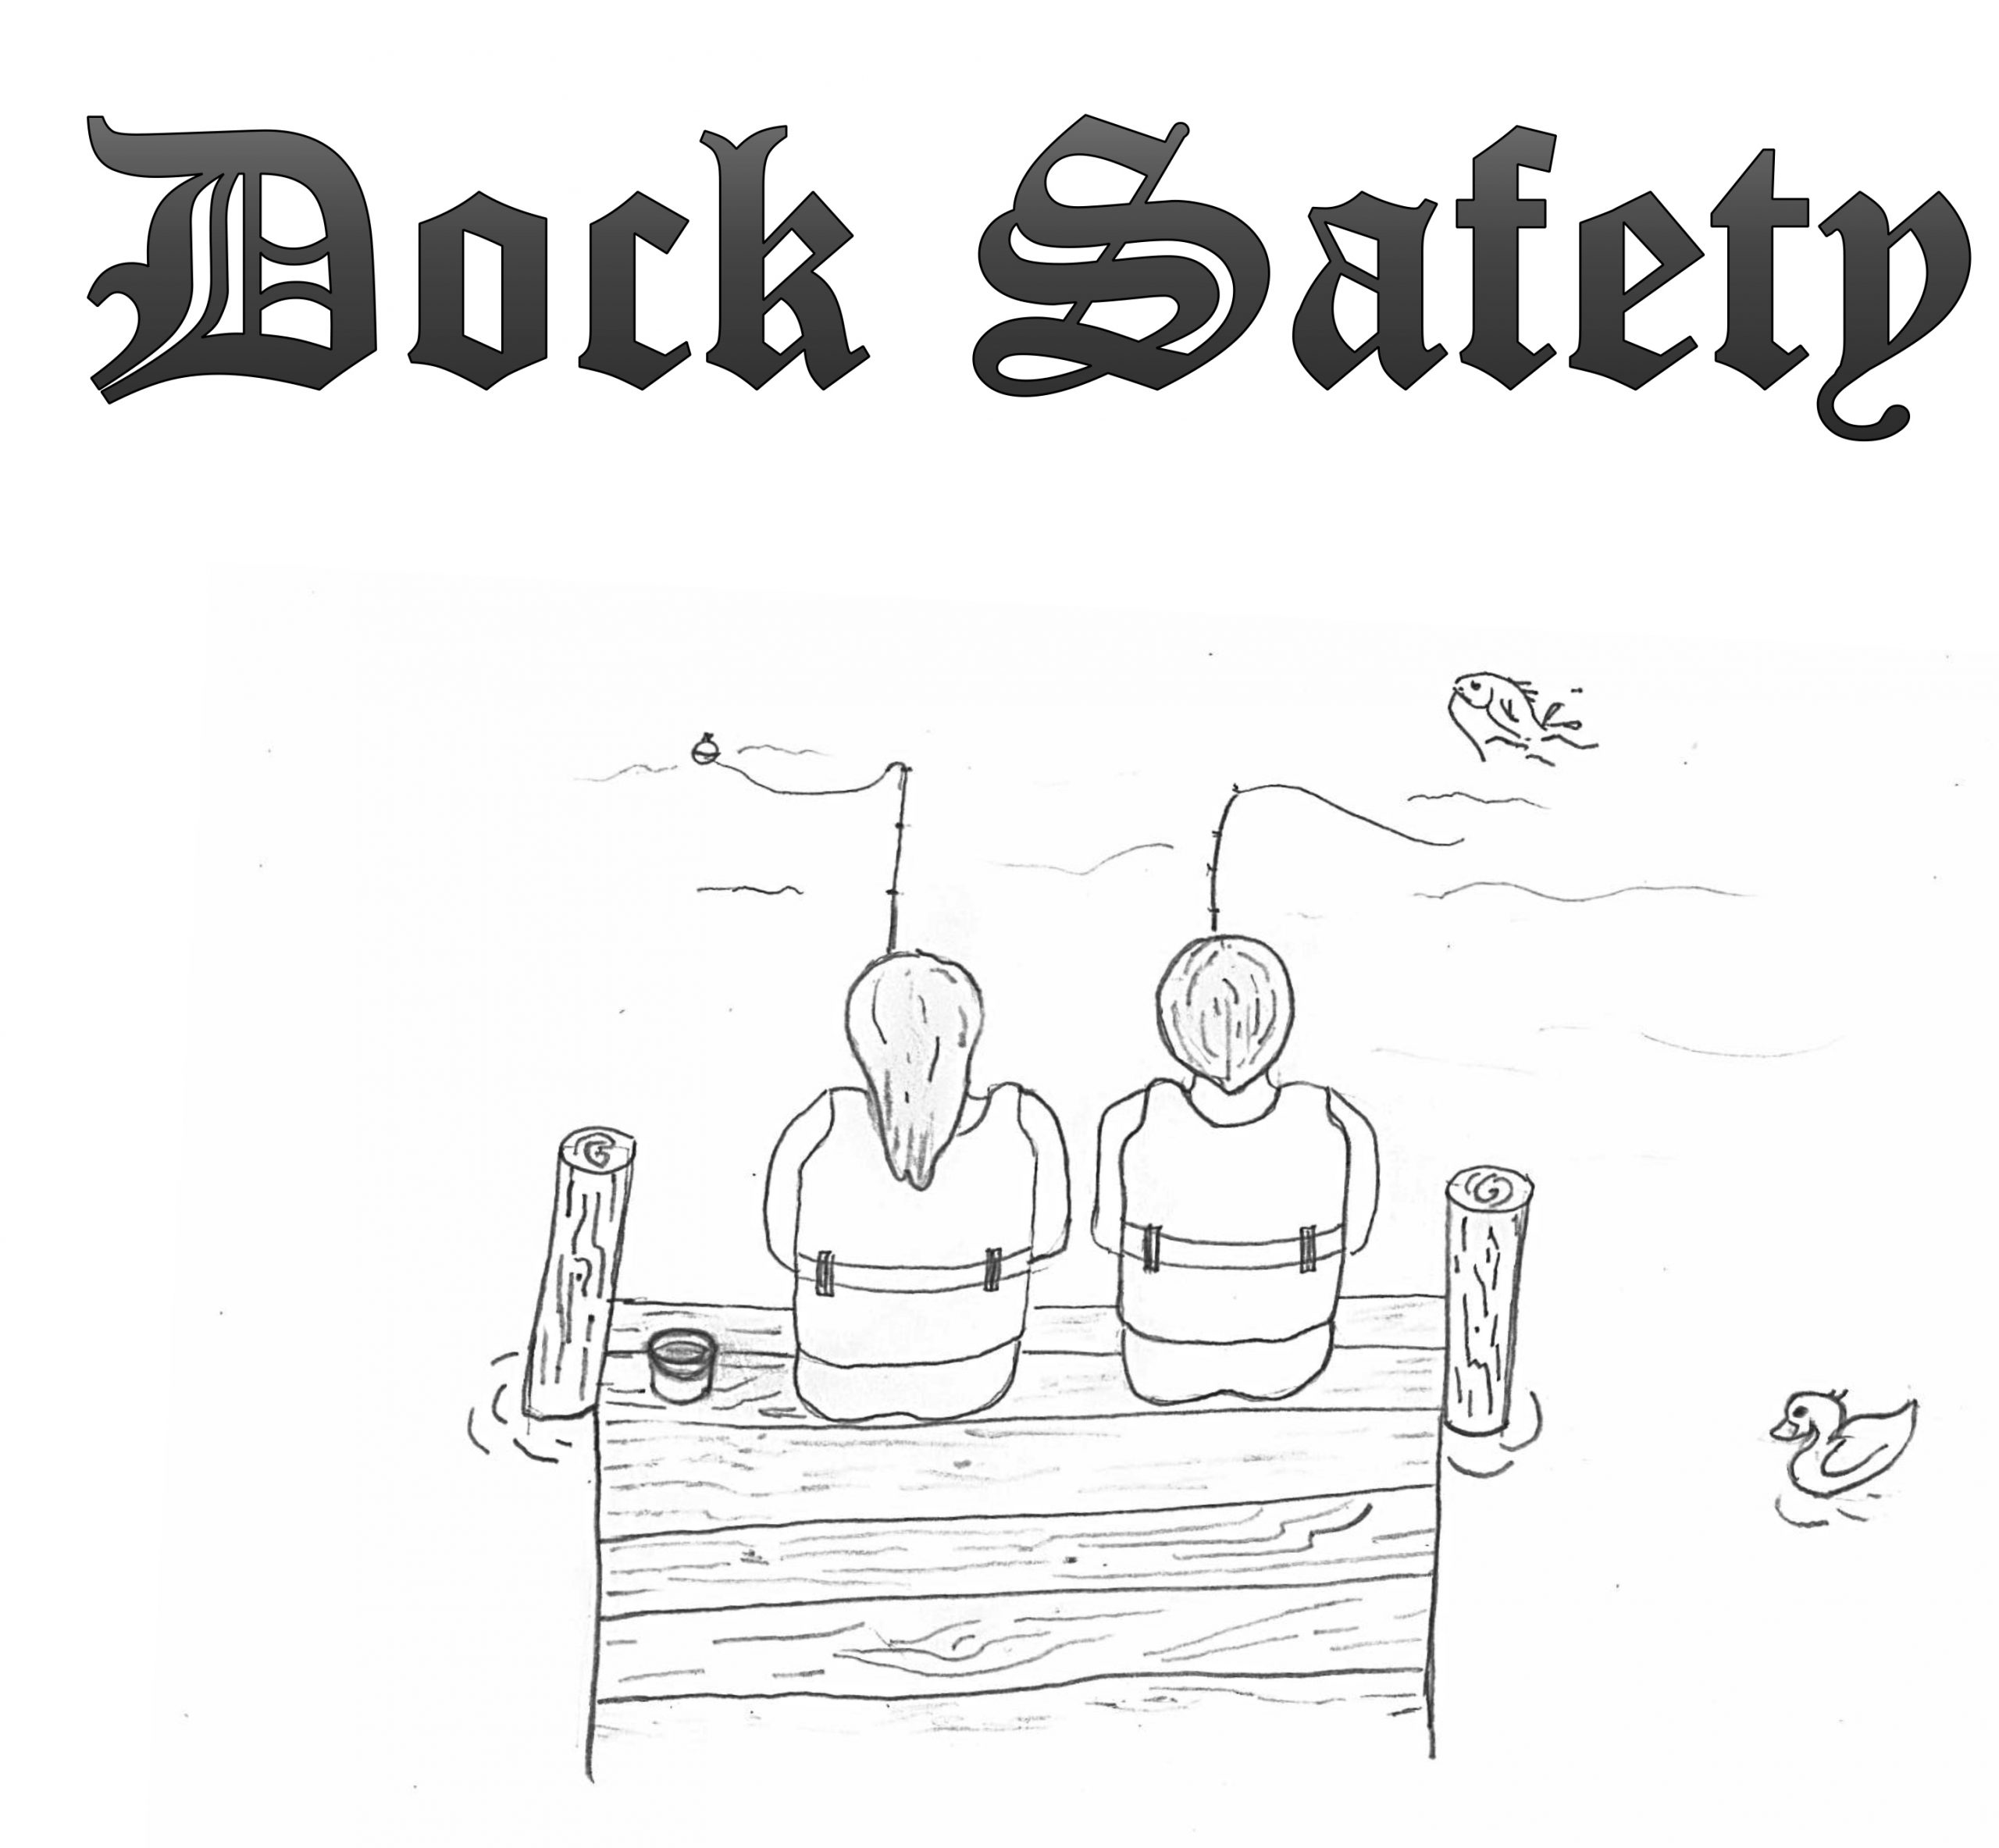 Dock-Safety-Print-1